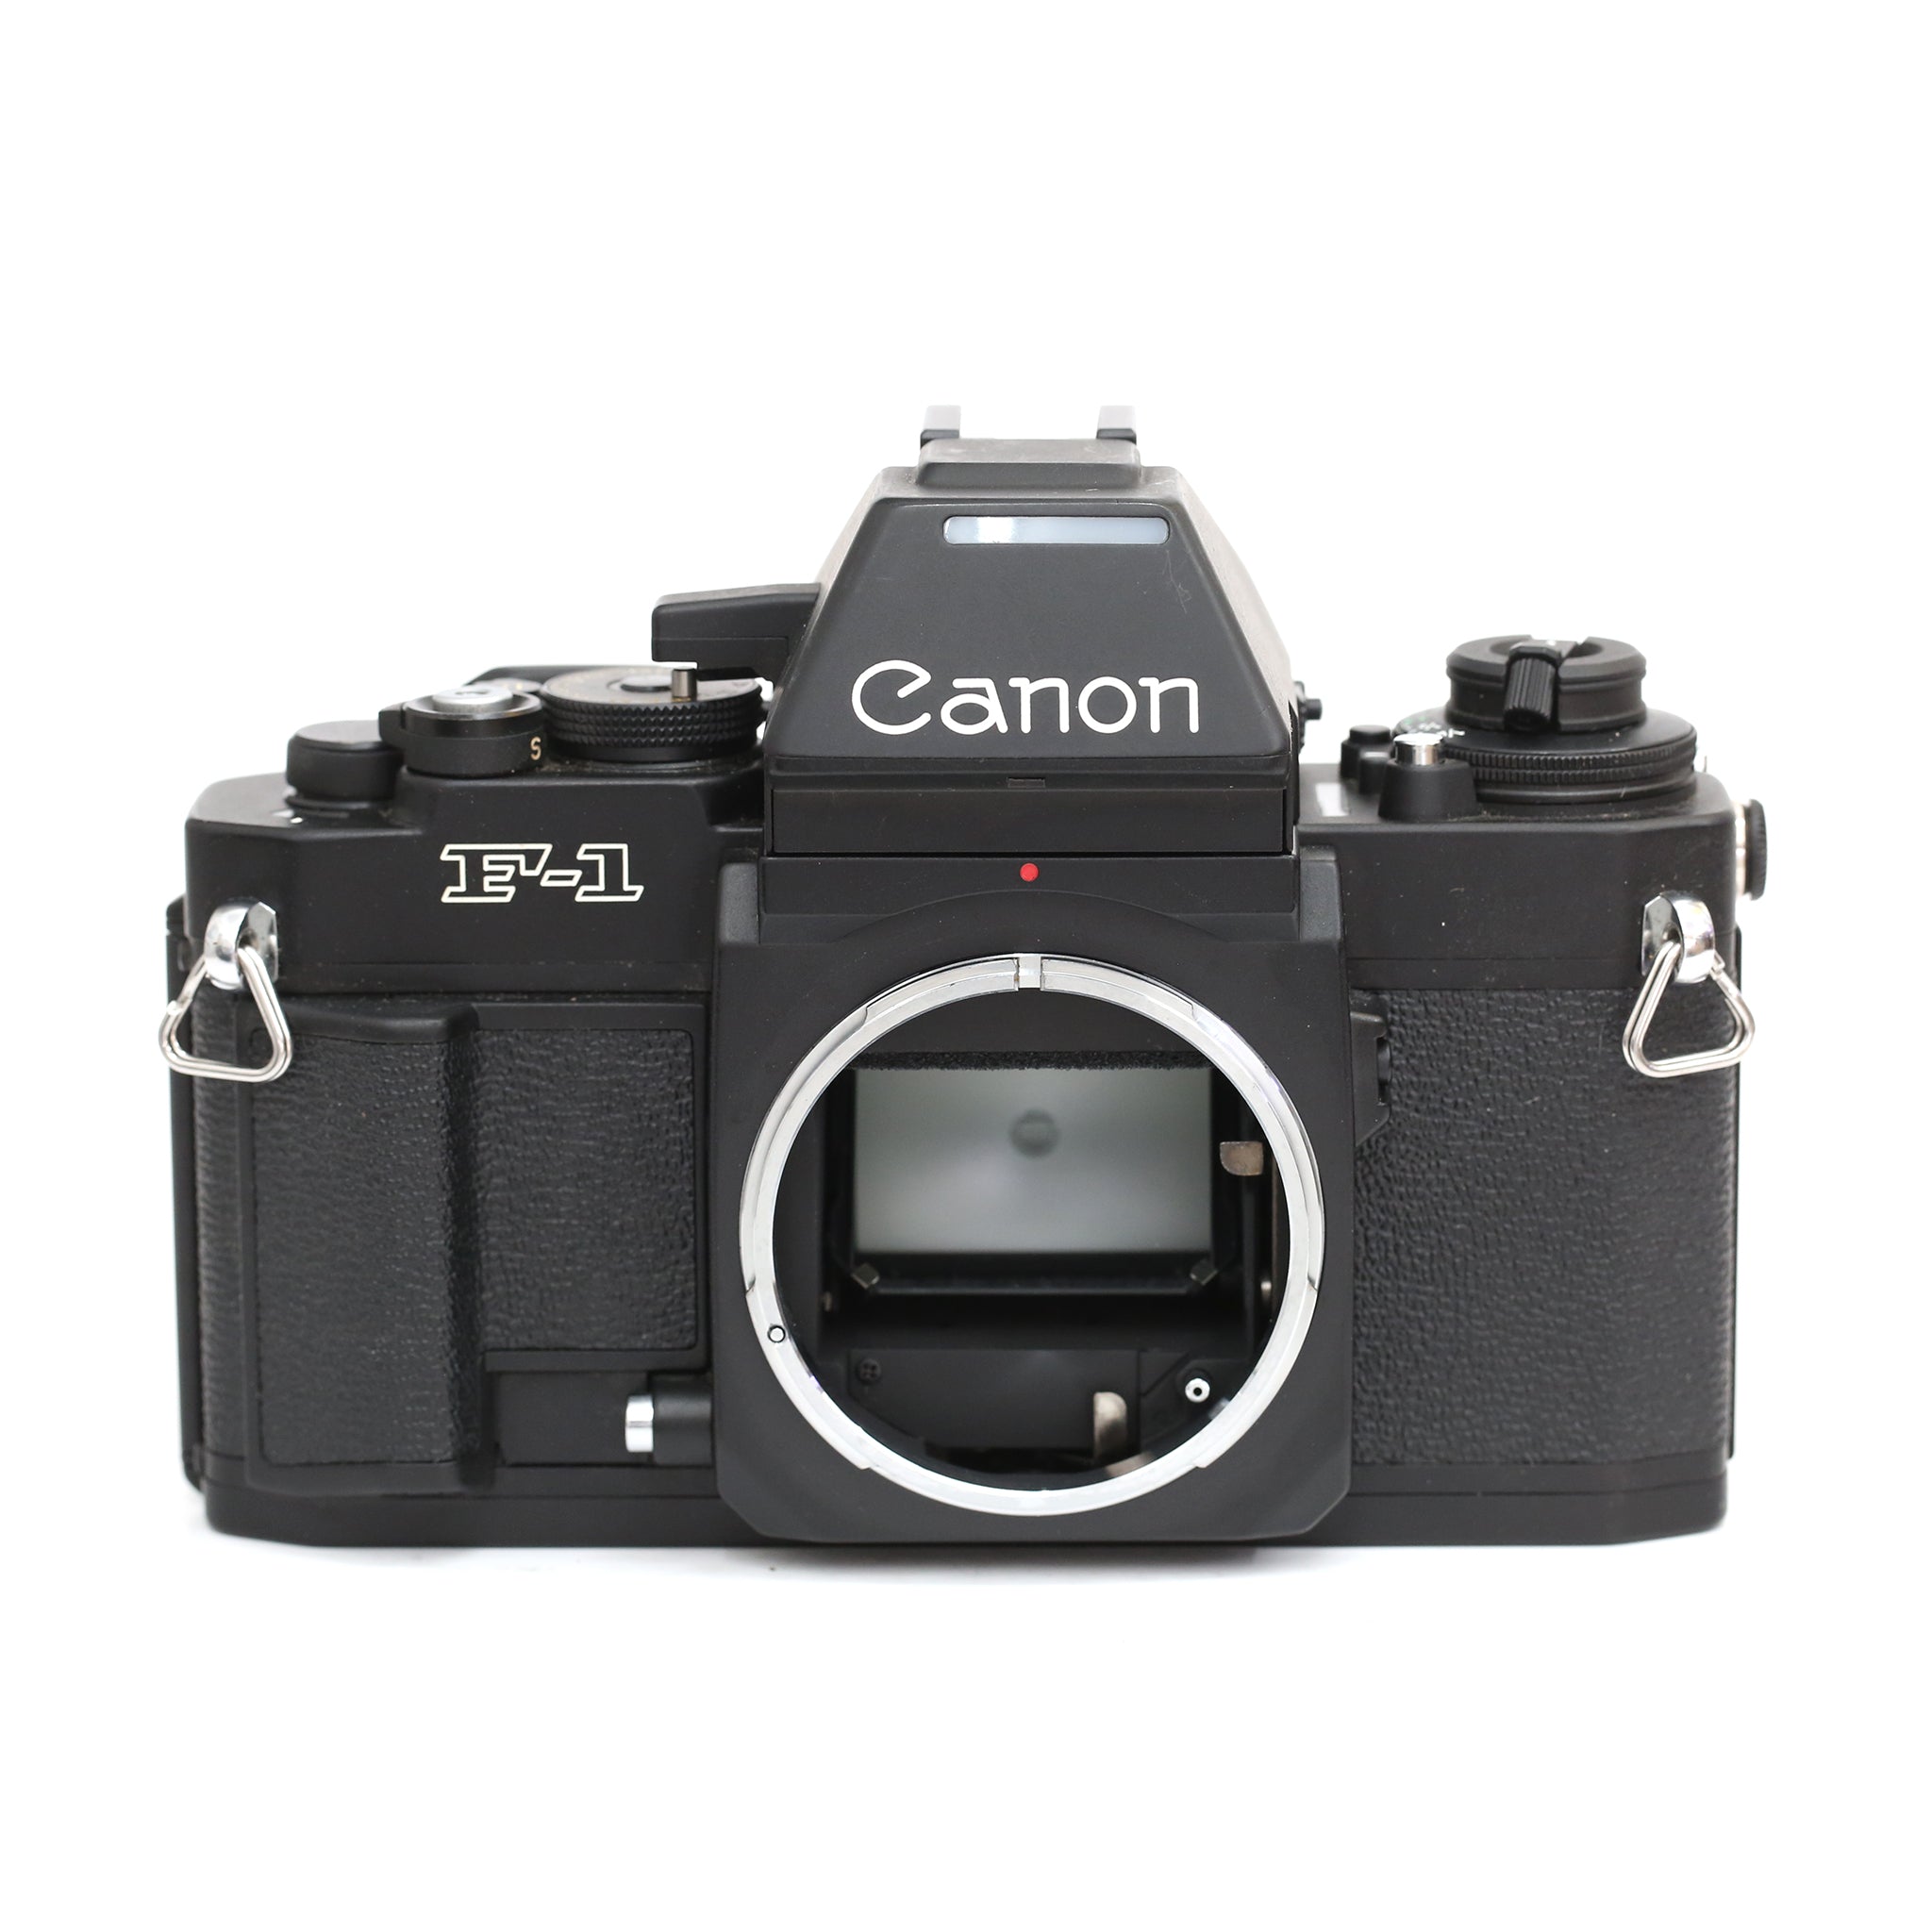 Canon F-1 New (in near mint condition)